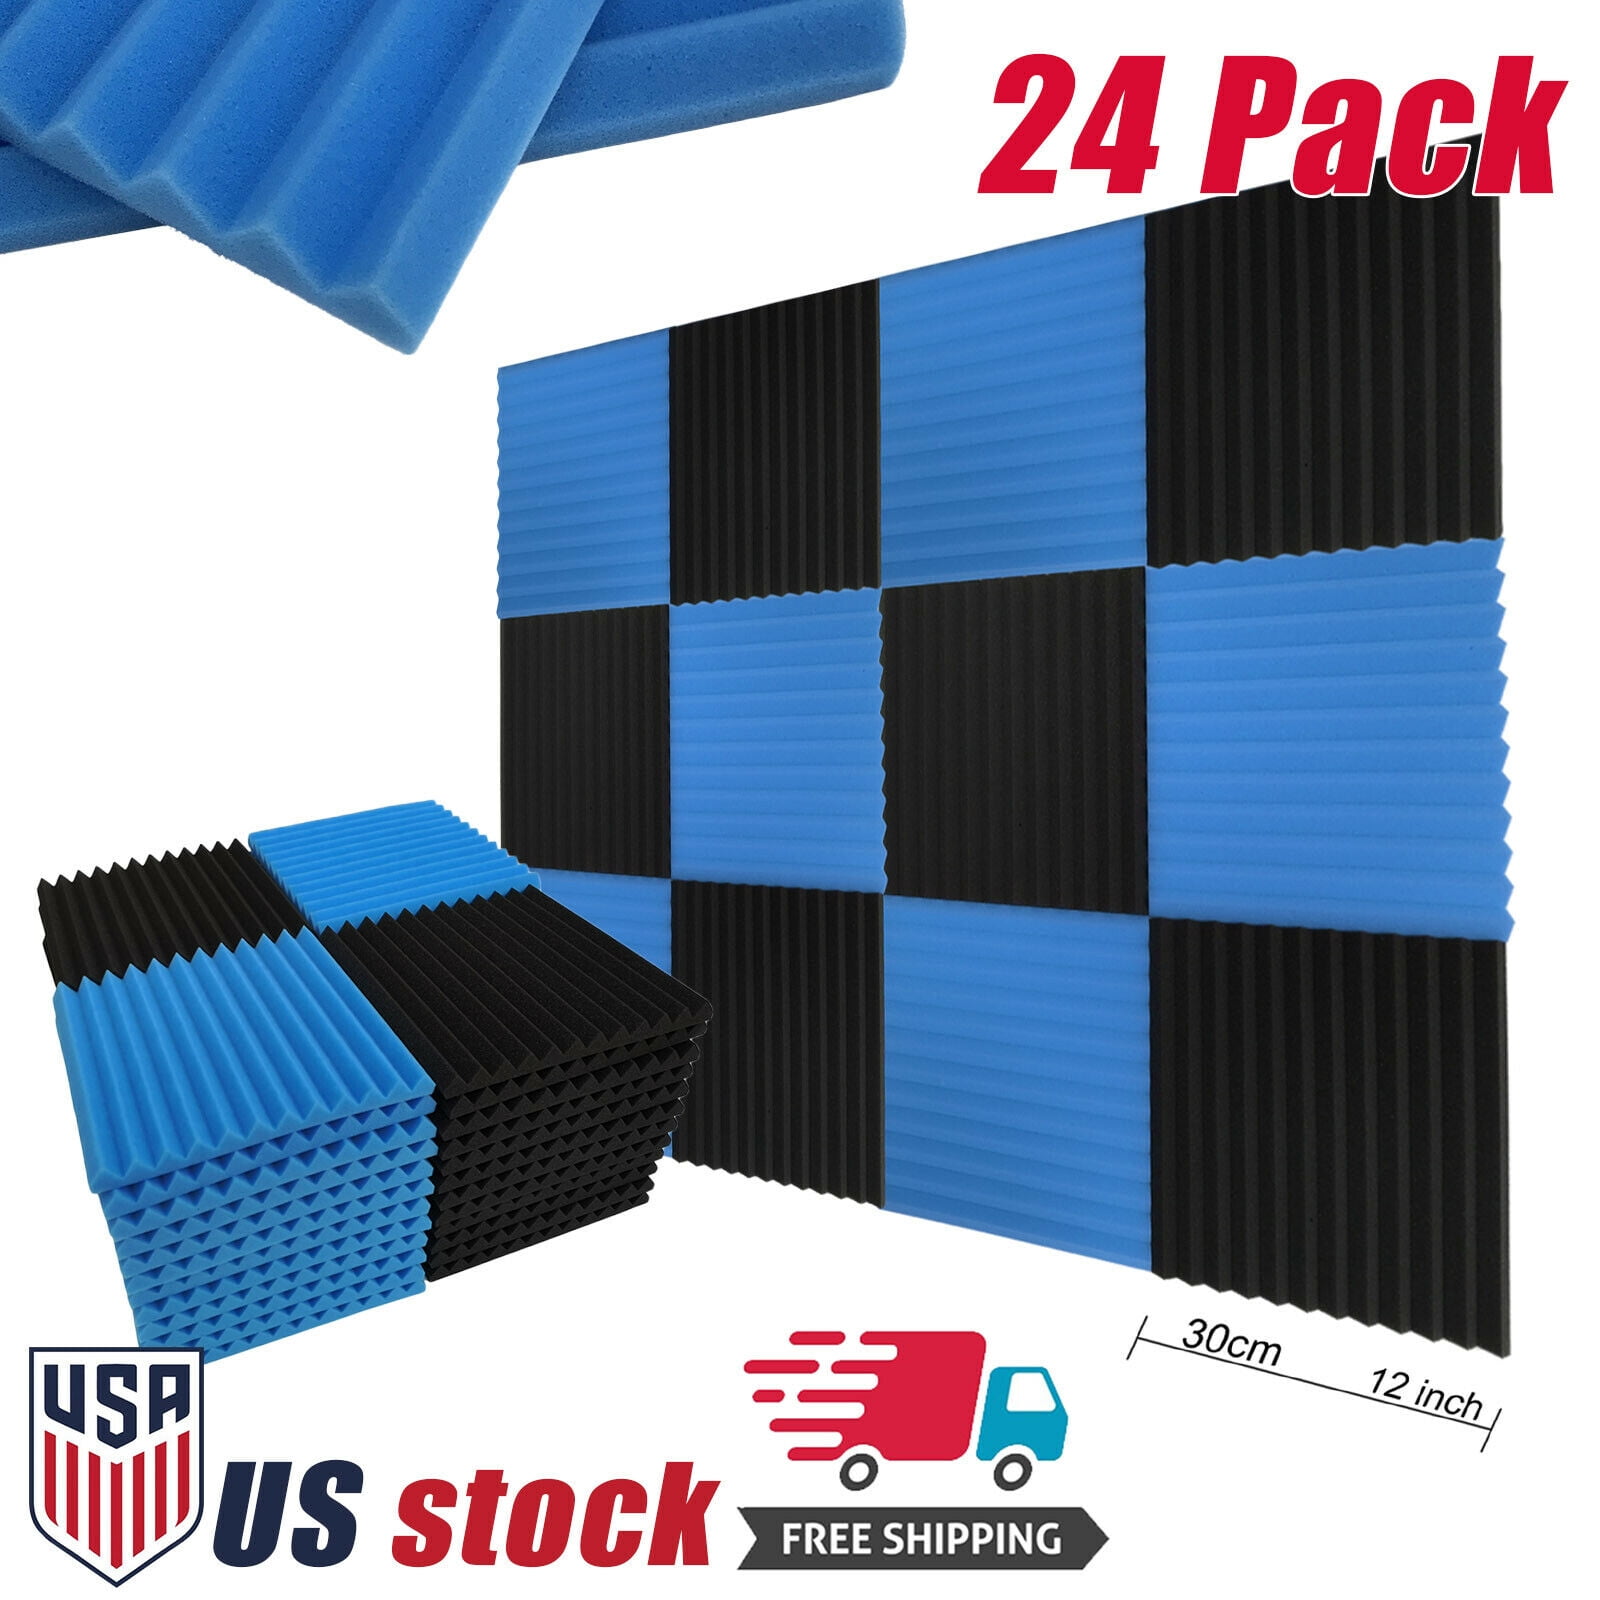 Altatac Acoustic Foam Panels Wedge Tiles For Studio Home Office etc Set of  12 - Black